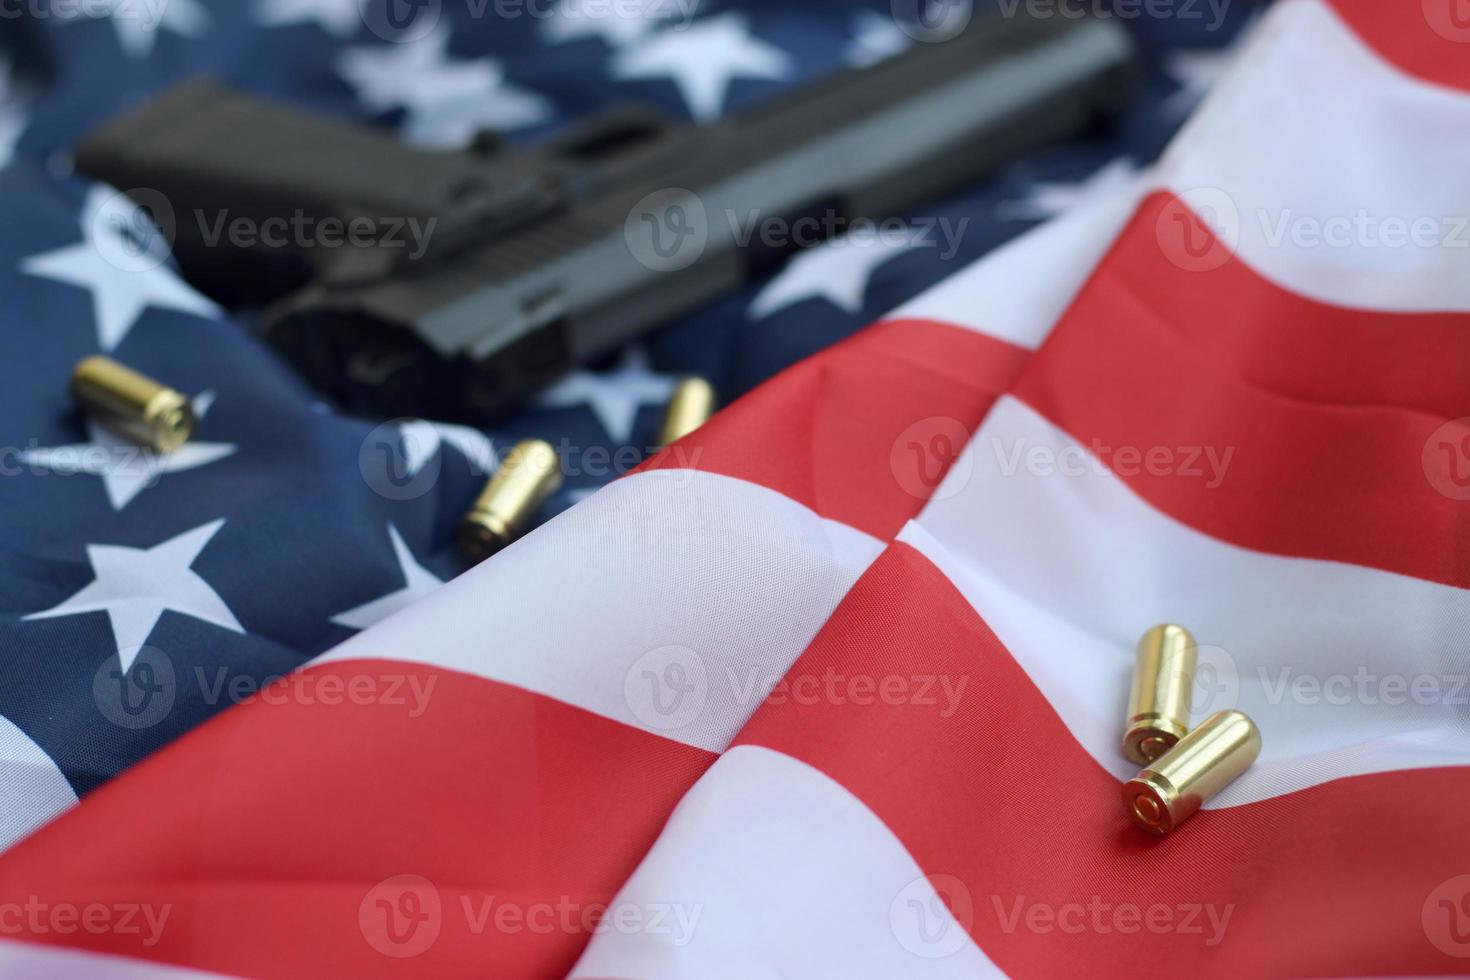 As balas e a pistola de 9mm encontram-se na bandeira dobrada dos estados unidos foto